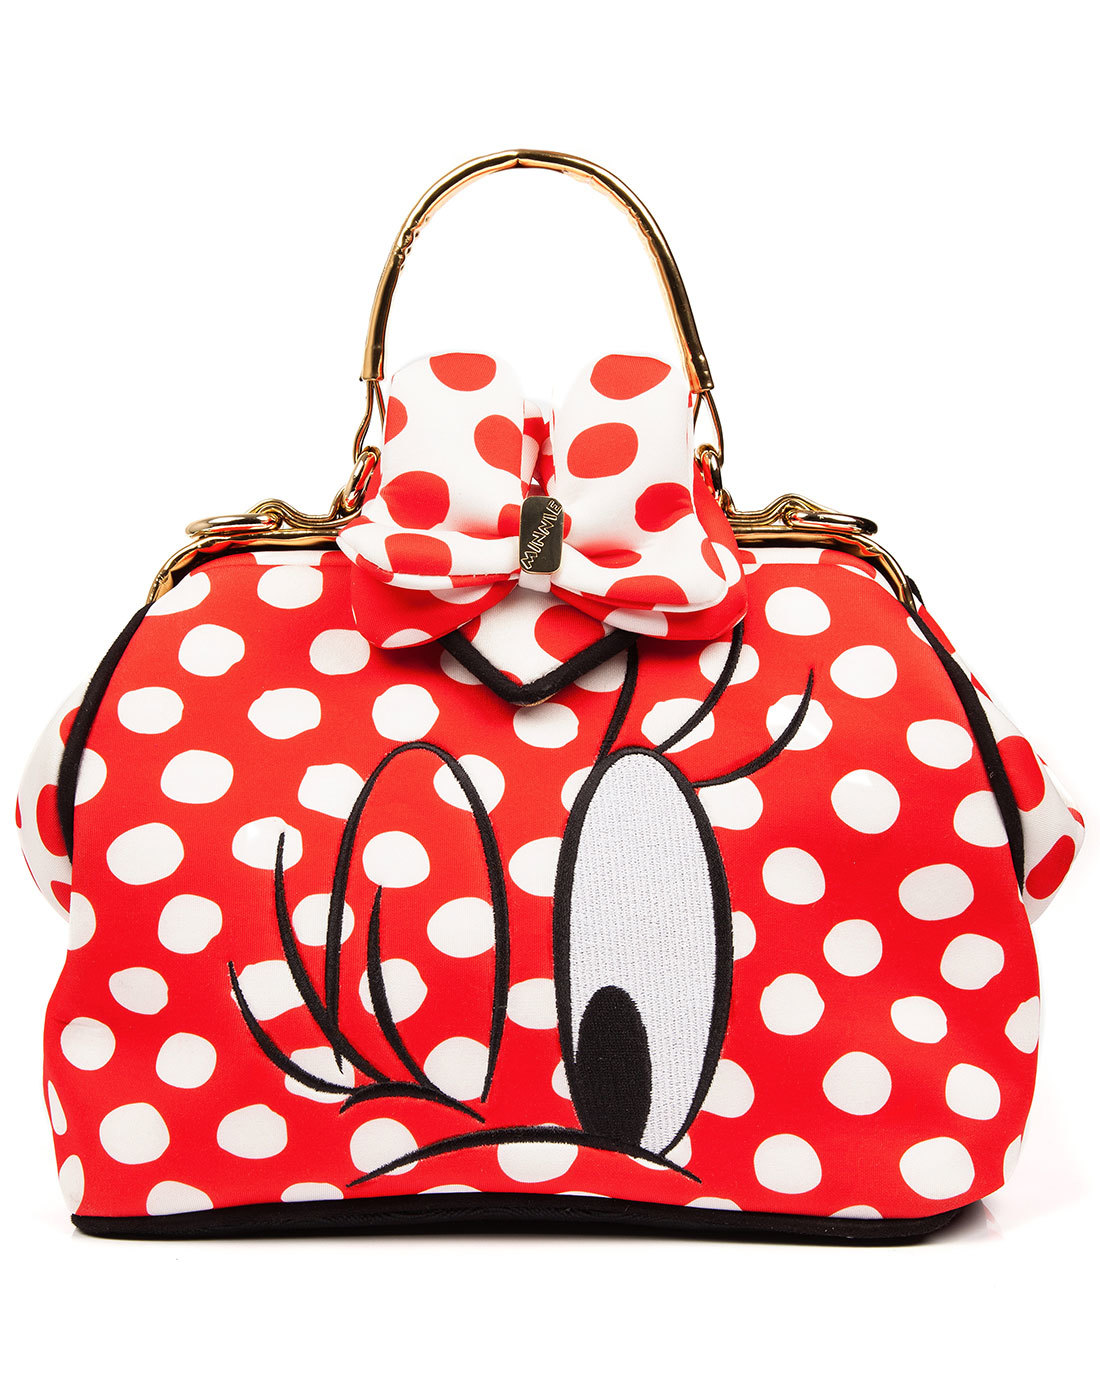 I Heart Minnie IRREGULAR CHOICE Polka Dot Handbag